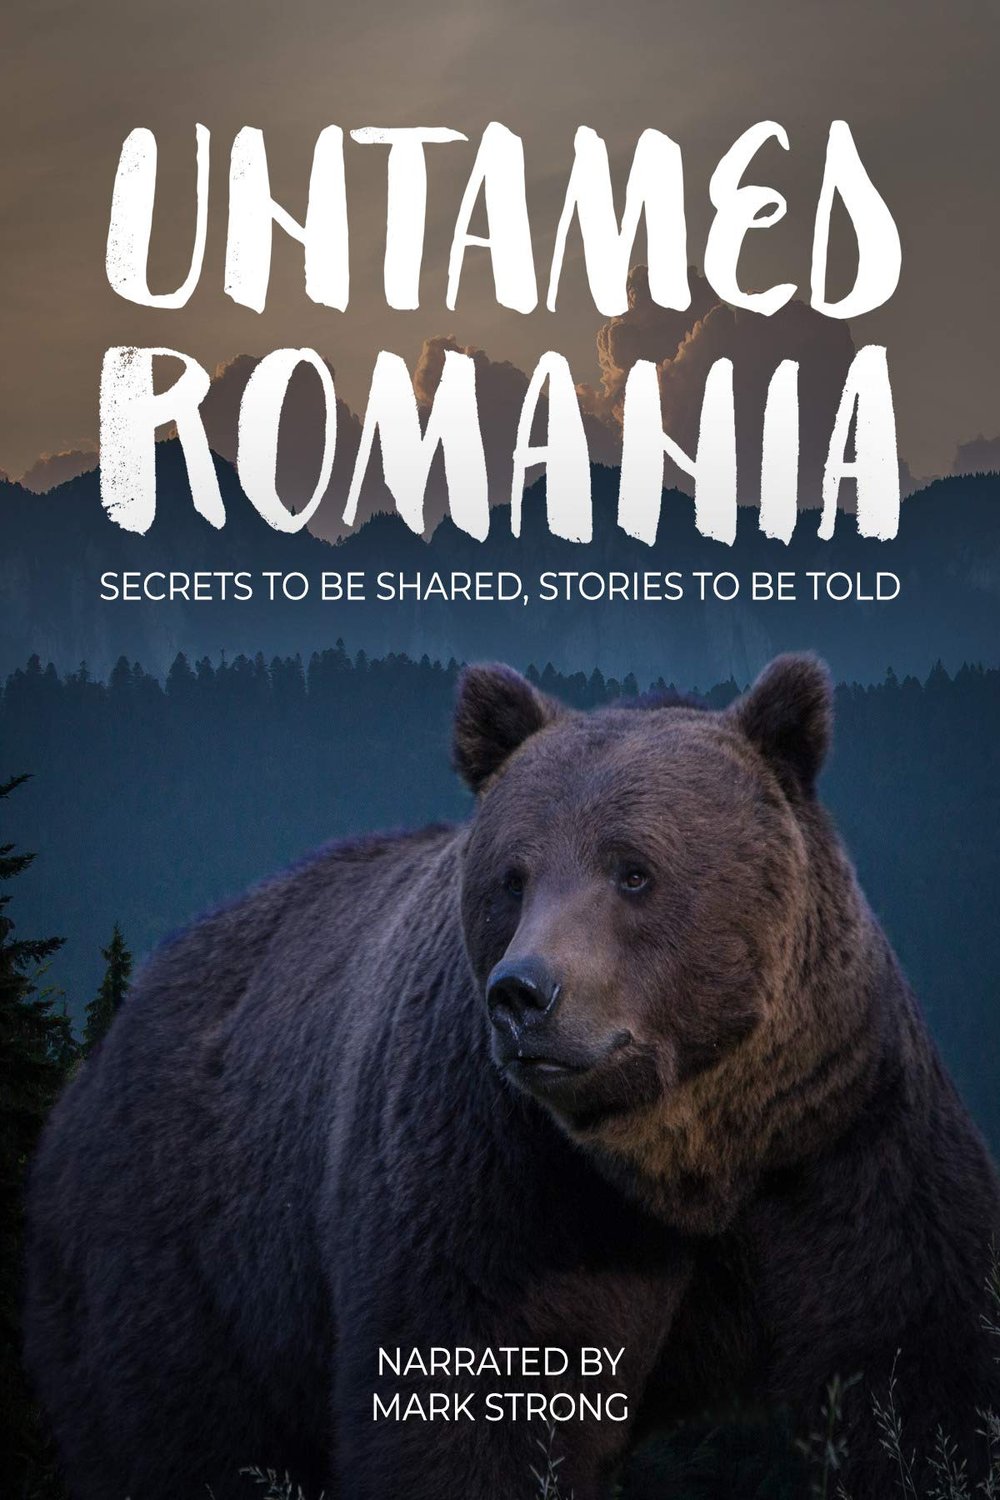 Romanian poster of the movie Untamed Romania